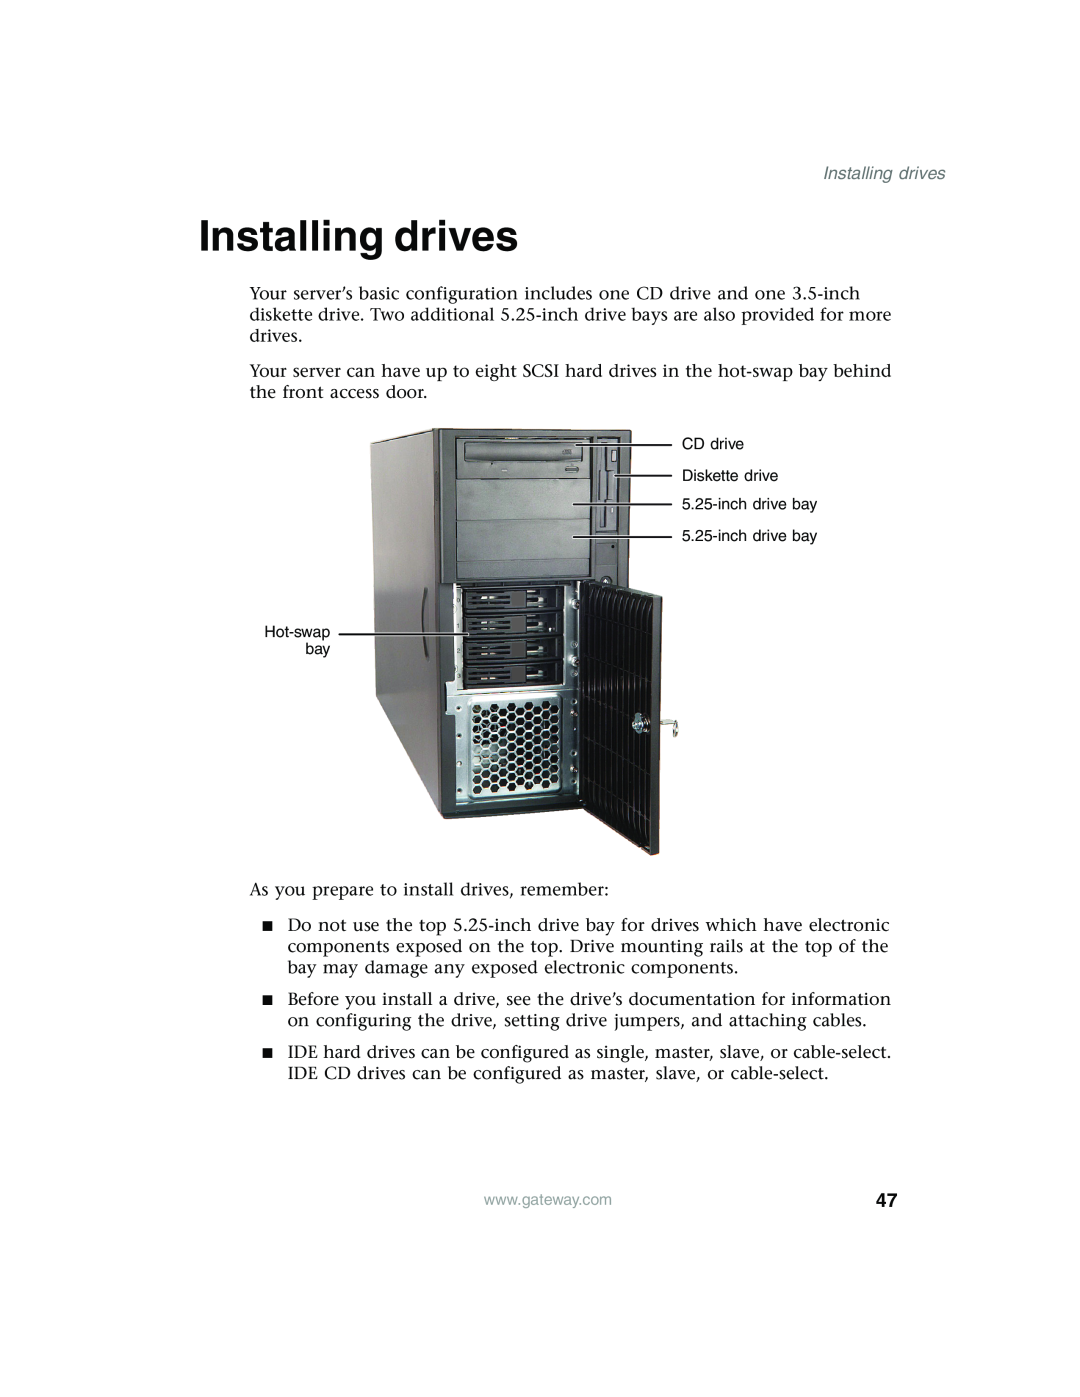 Gateway 960 manual Installing drives 